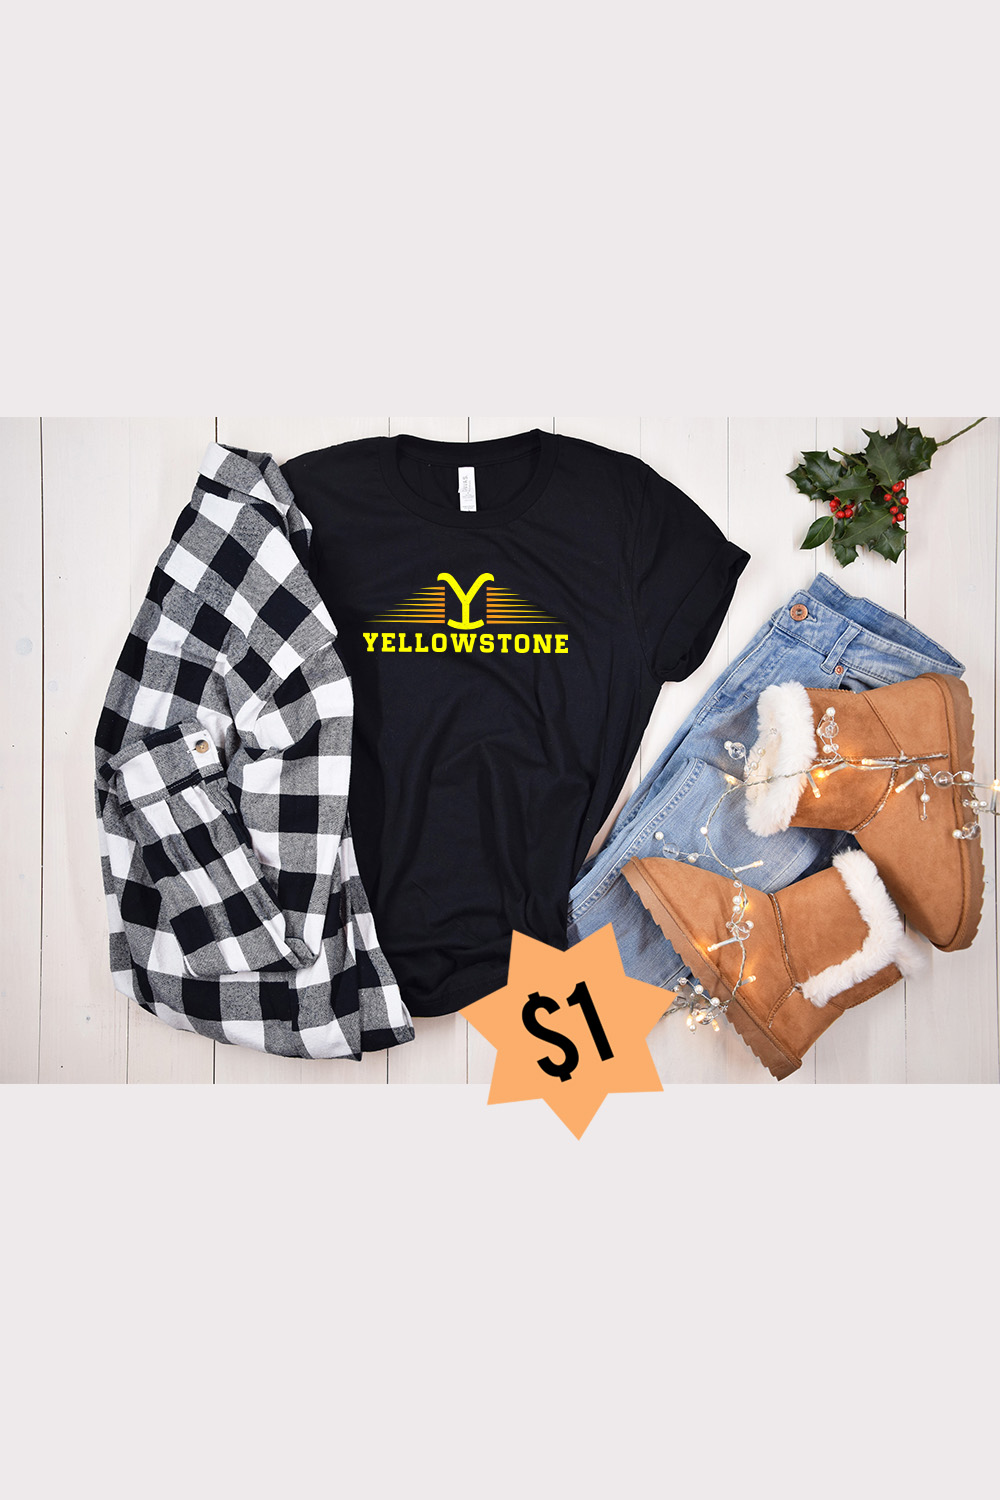 yeallowstone typography t shirt design4 172